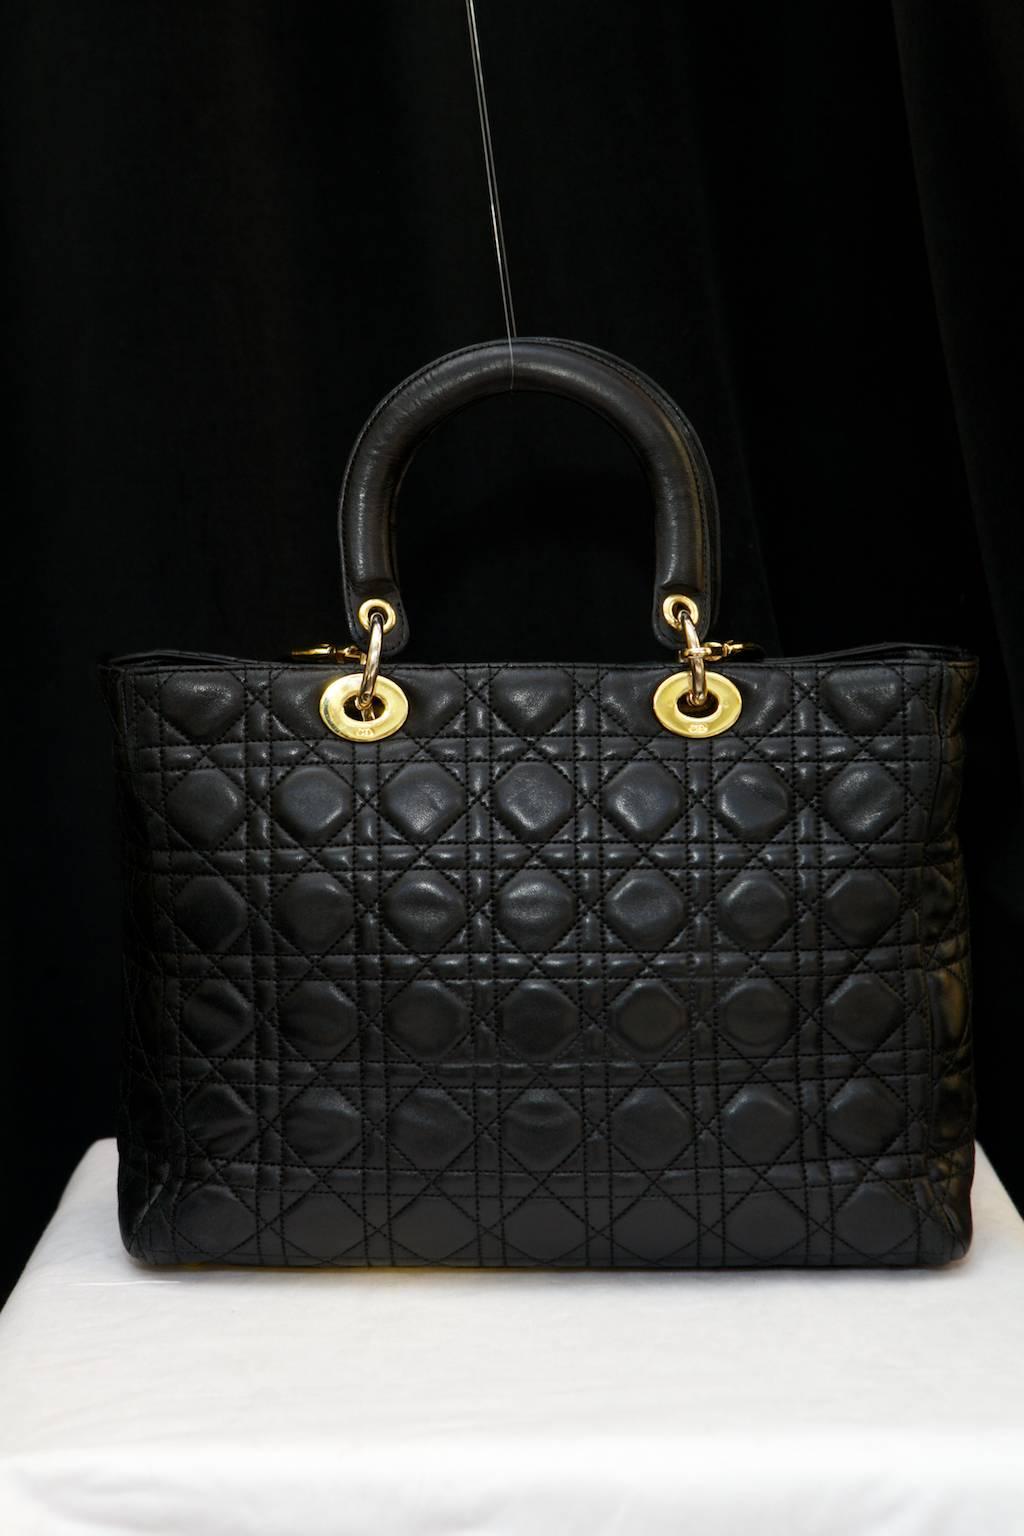 Women's 2012 Christian Dior Iconic Large 'Lady Dior' Handbag in Black Lambskin and Gilt